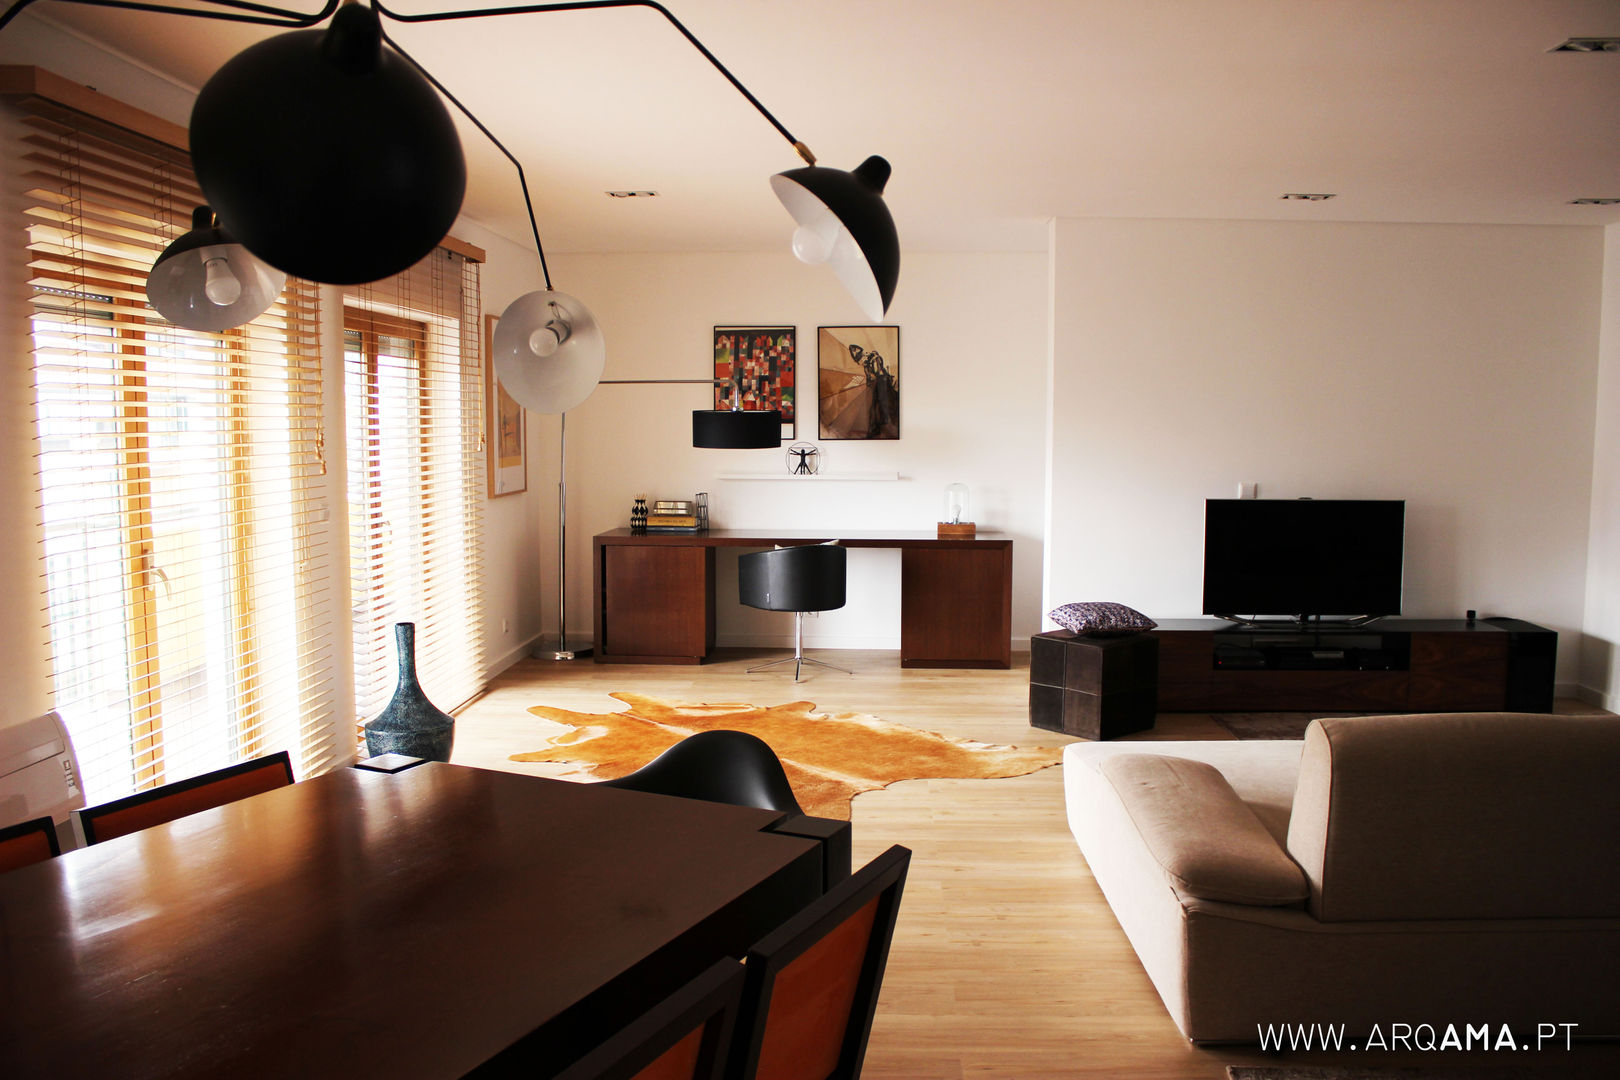 SCANDINAVIAN HOUSE PROJECT, ARQAMA - Arquitetura e Design Lda ARQAMA - Arquitetura e Design Lda Living room